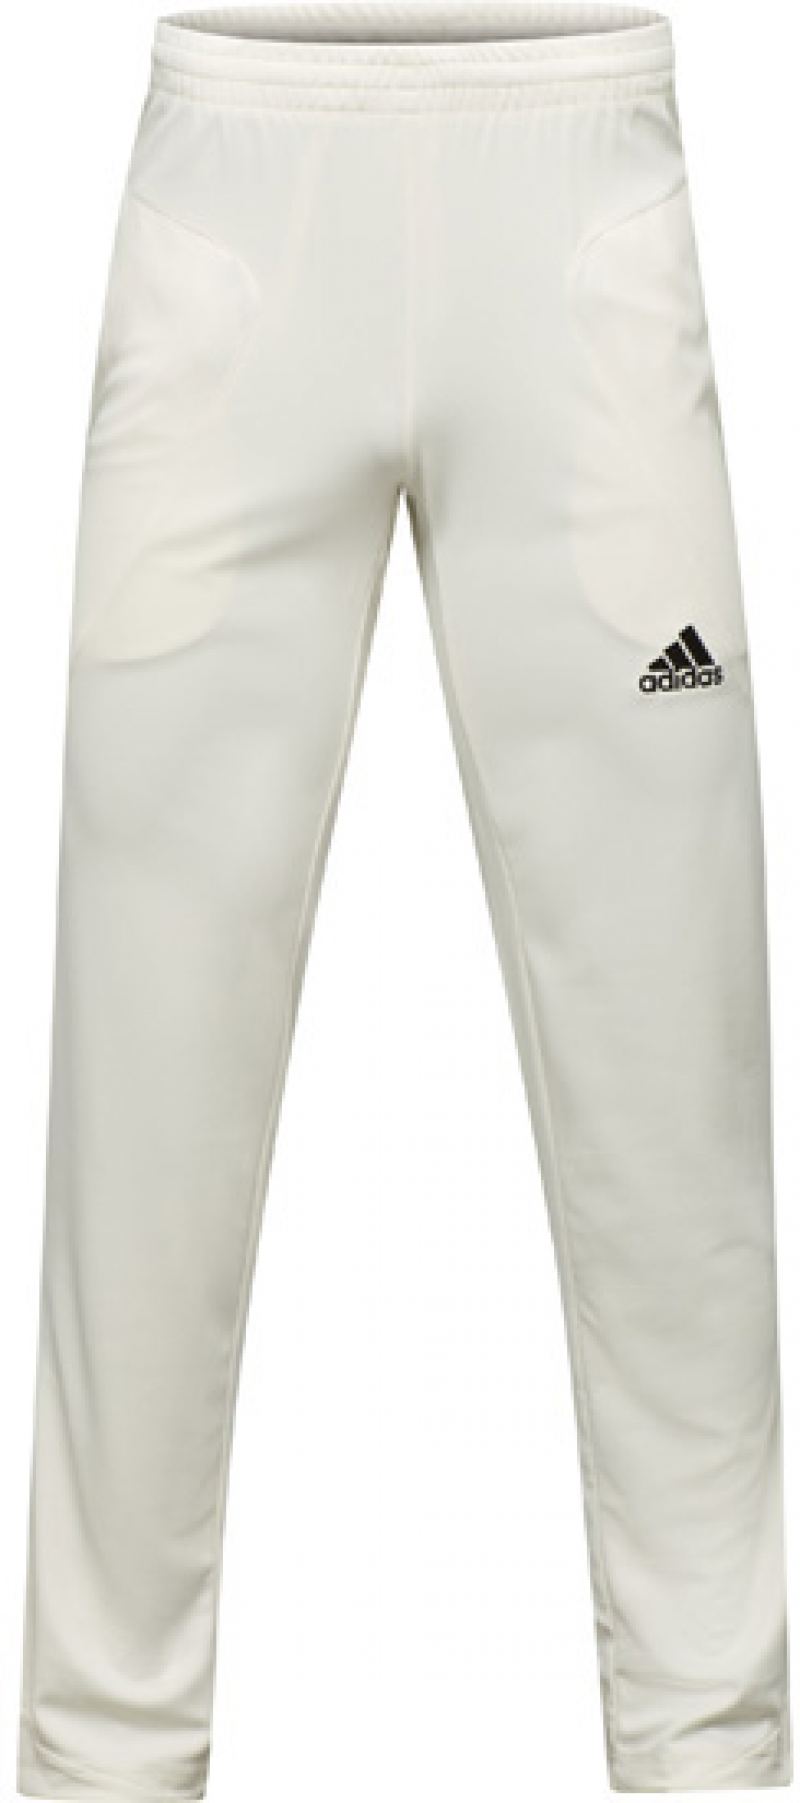 Adidas Howzat Cricket Trousers (Junior 